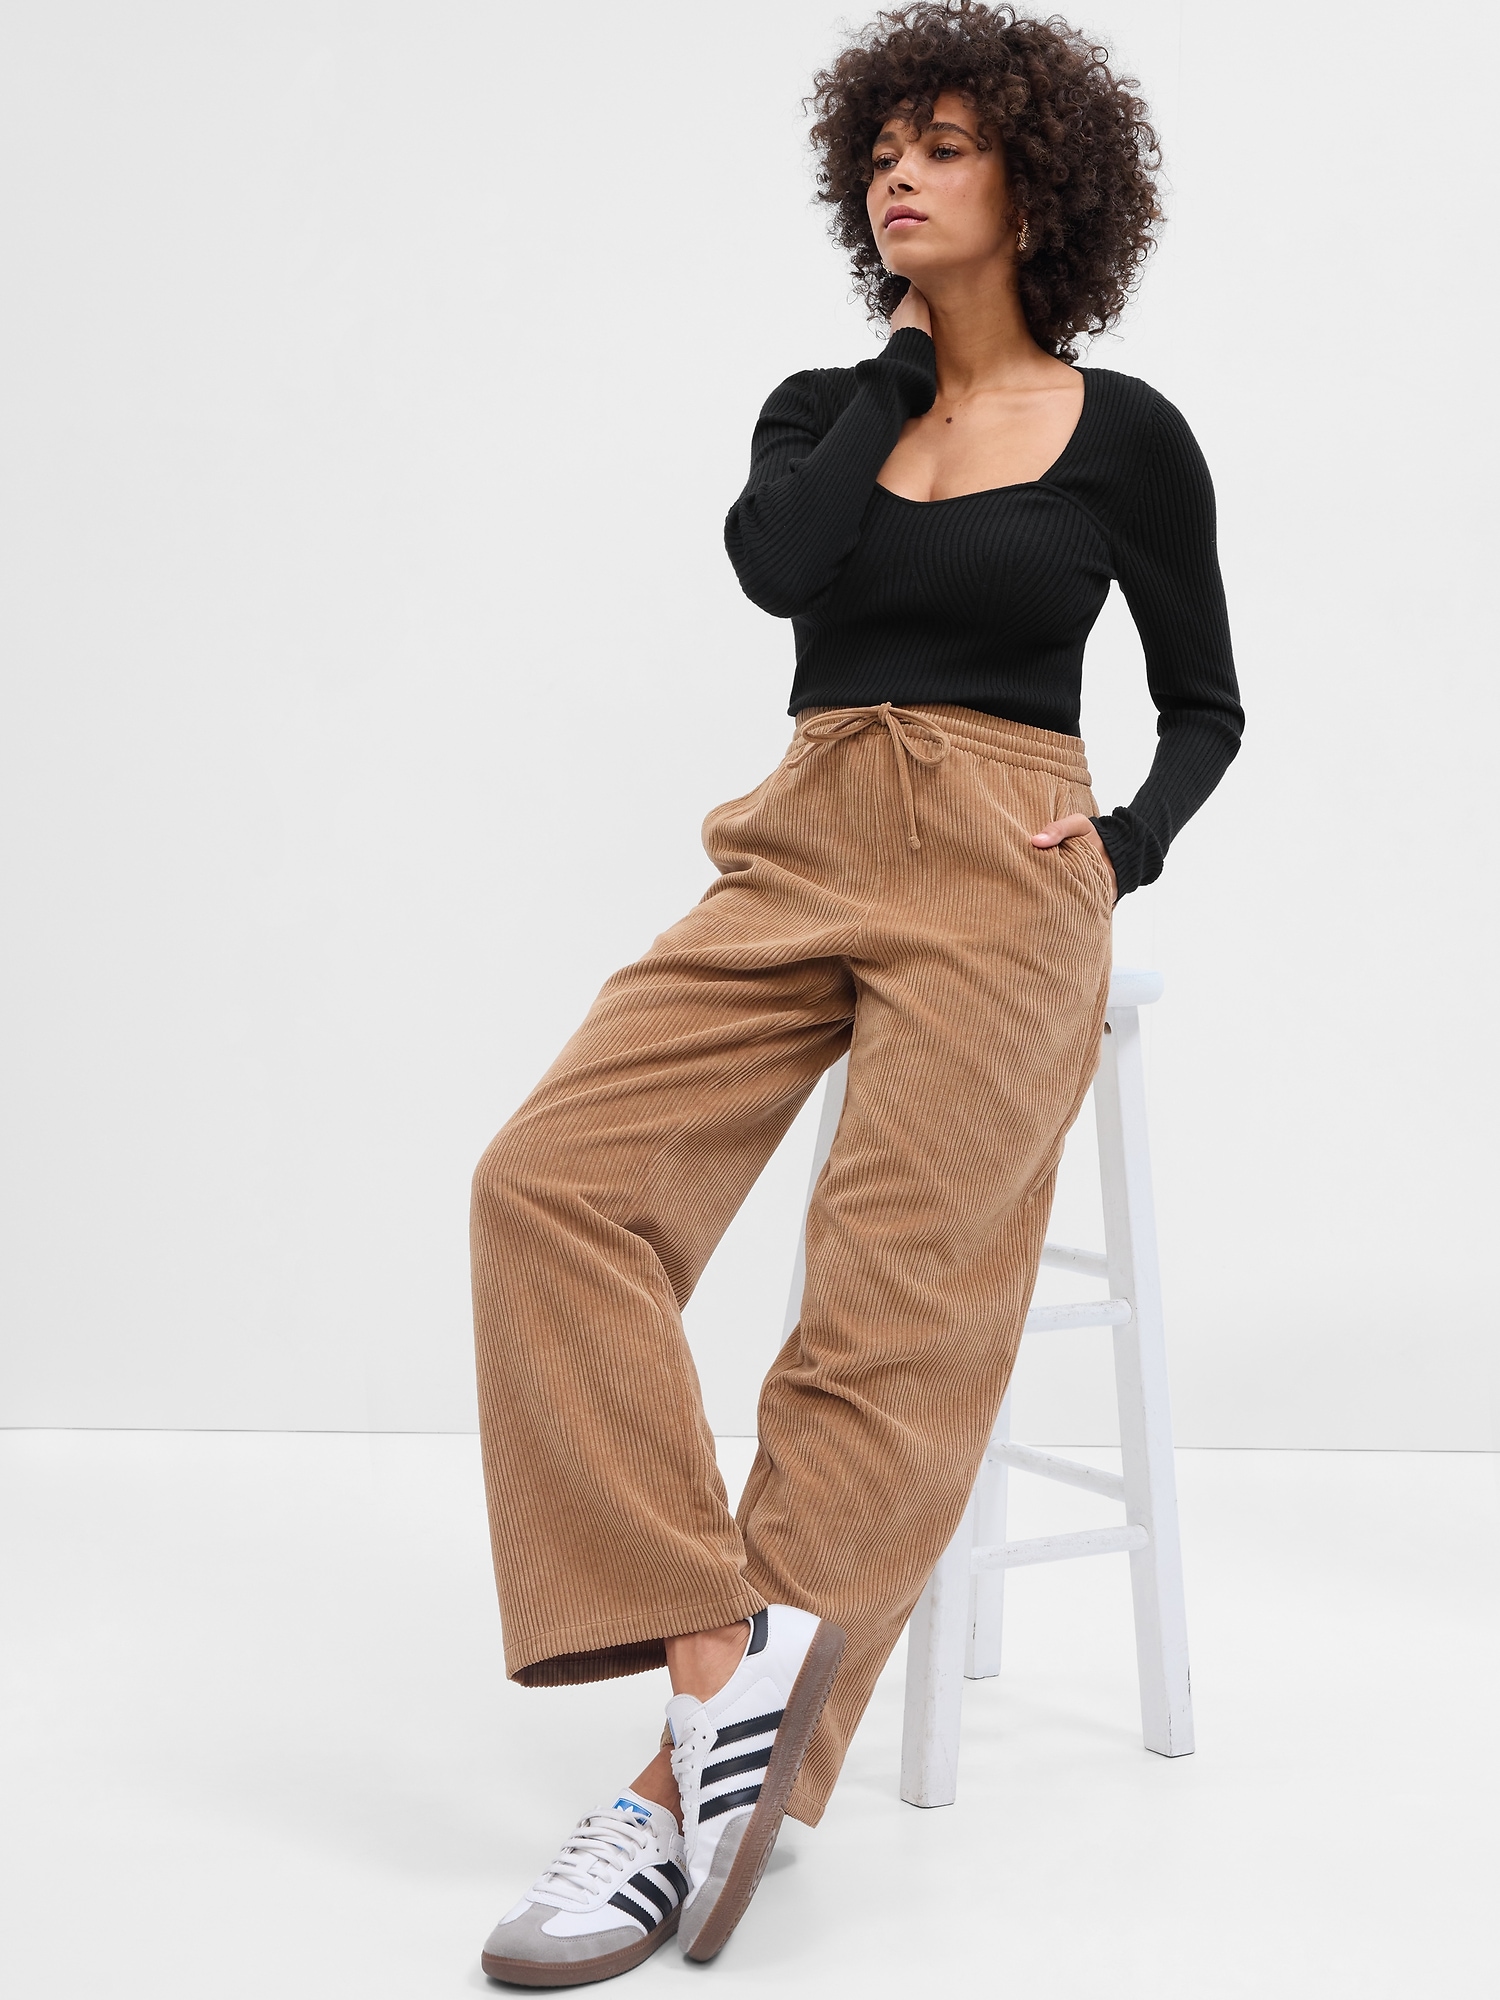 Generic Plus Size Stretch Corduroy Pants Women XL Brown @ Best Price Online